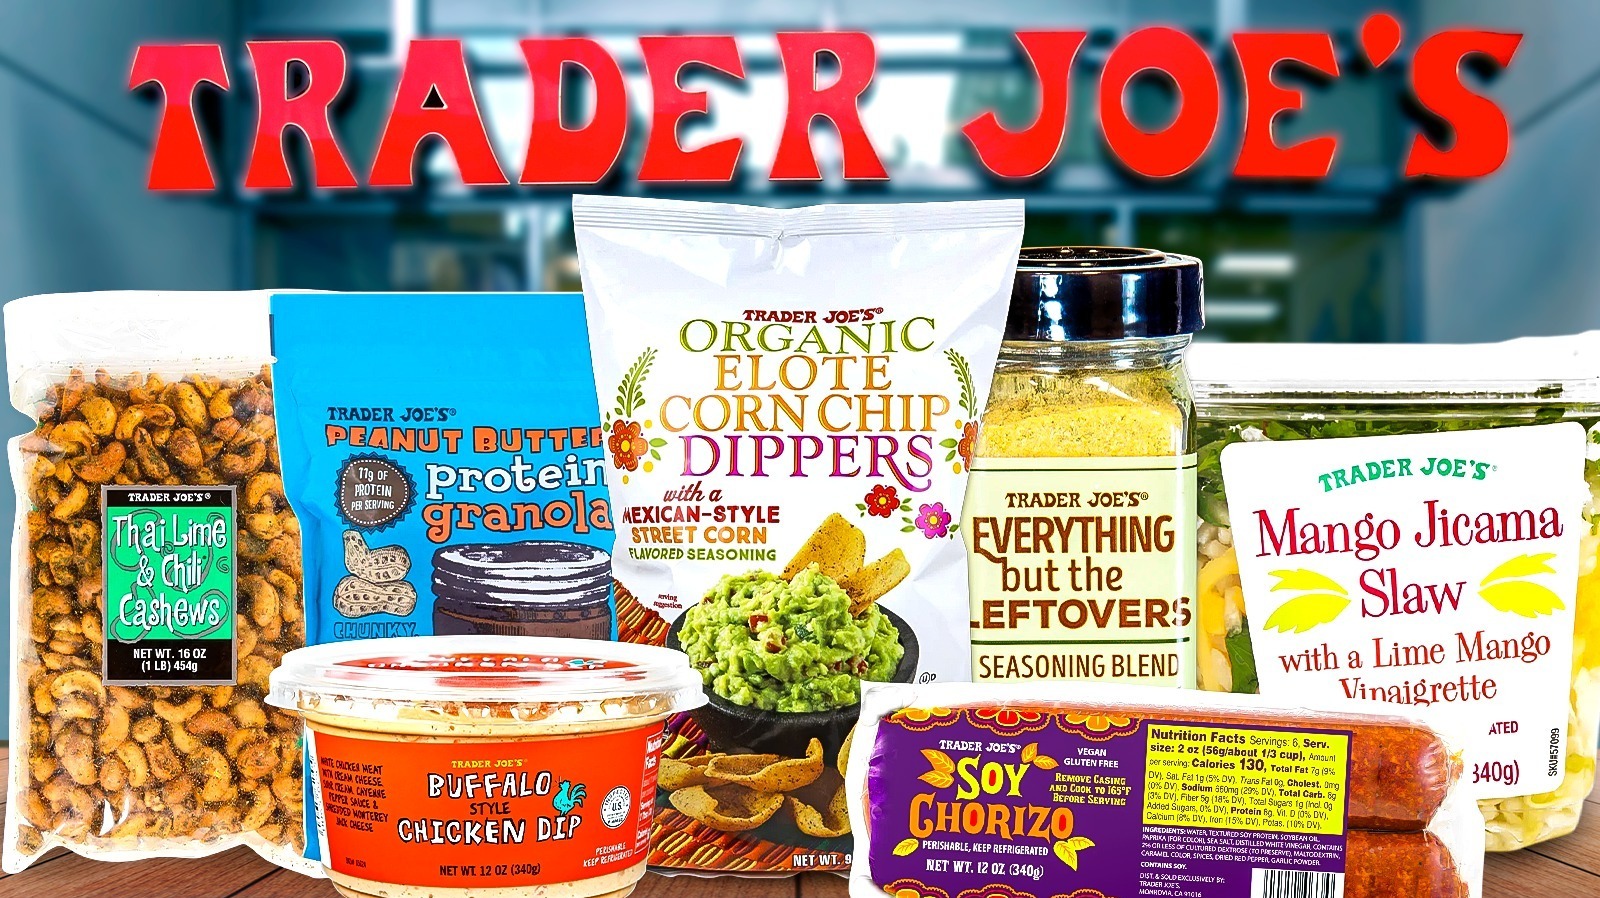 What's Good at Trader Joe's?: Trader Joe's Everything but the